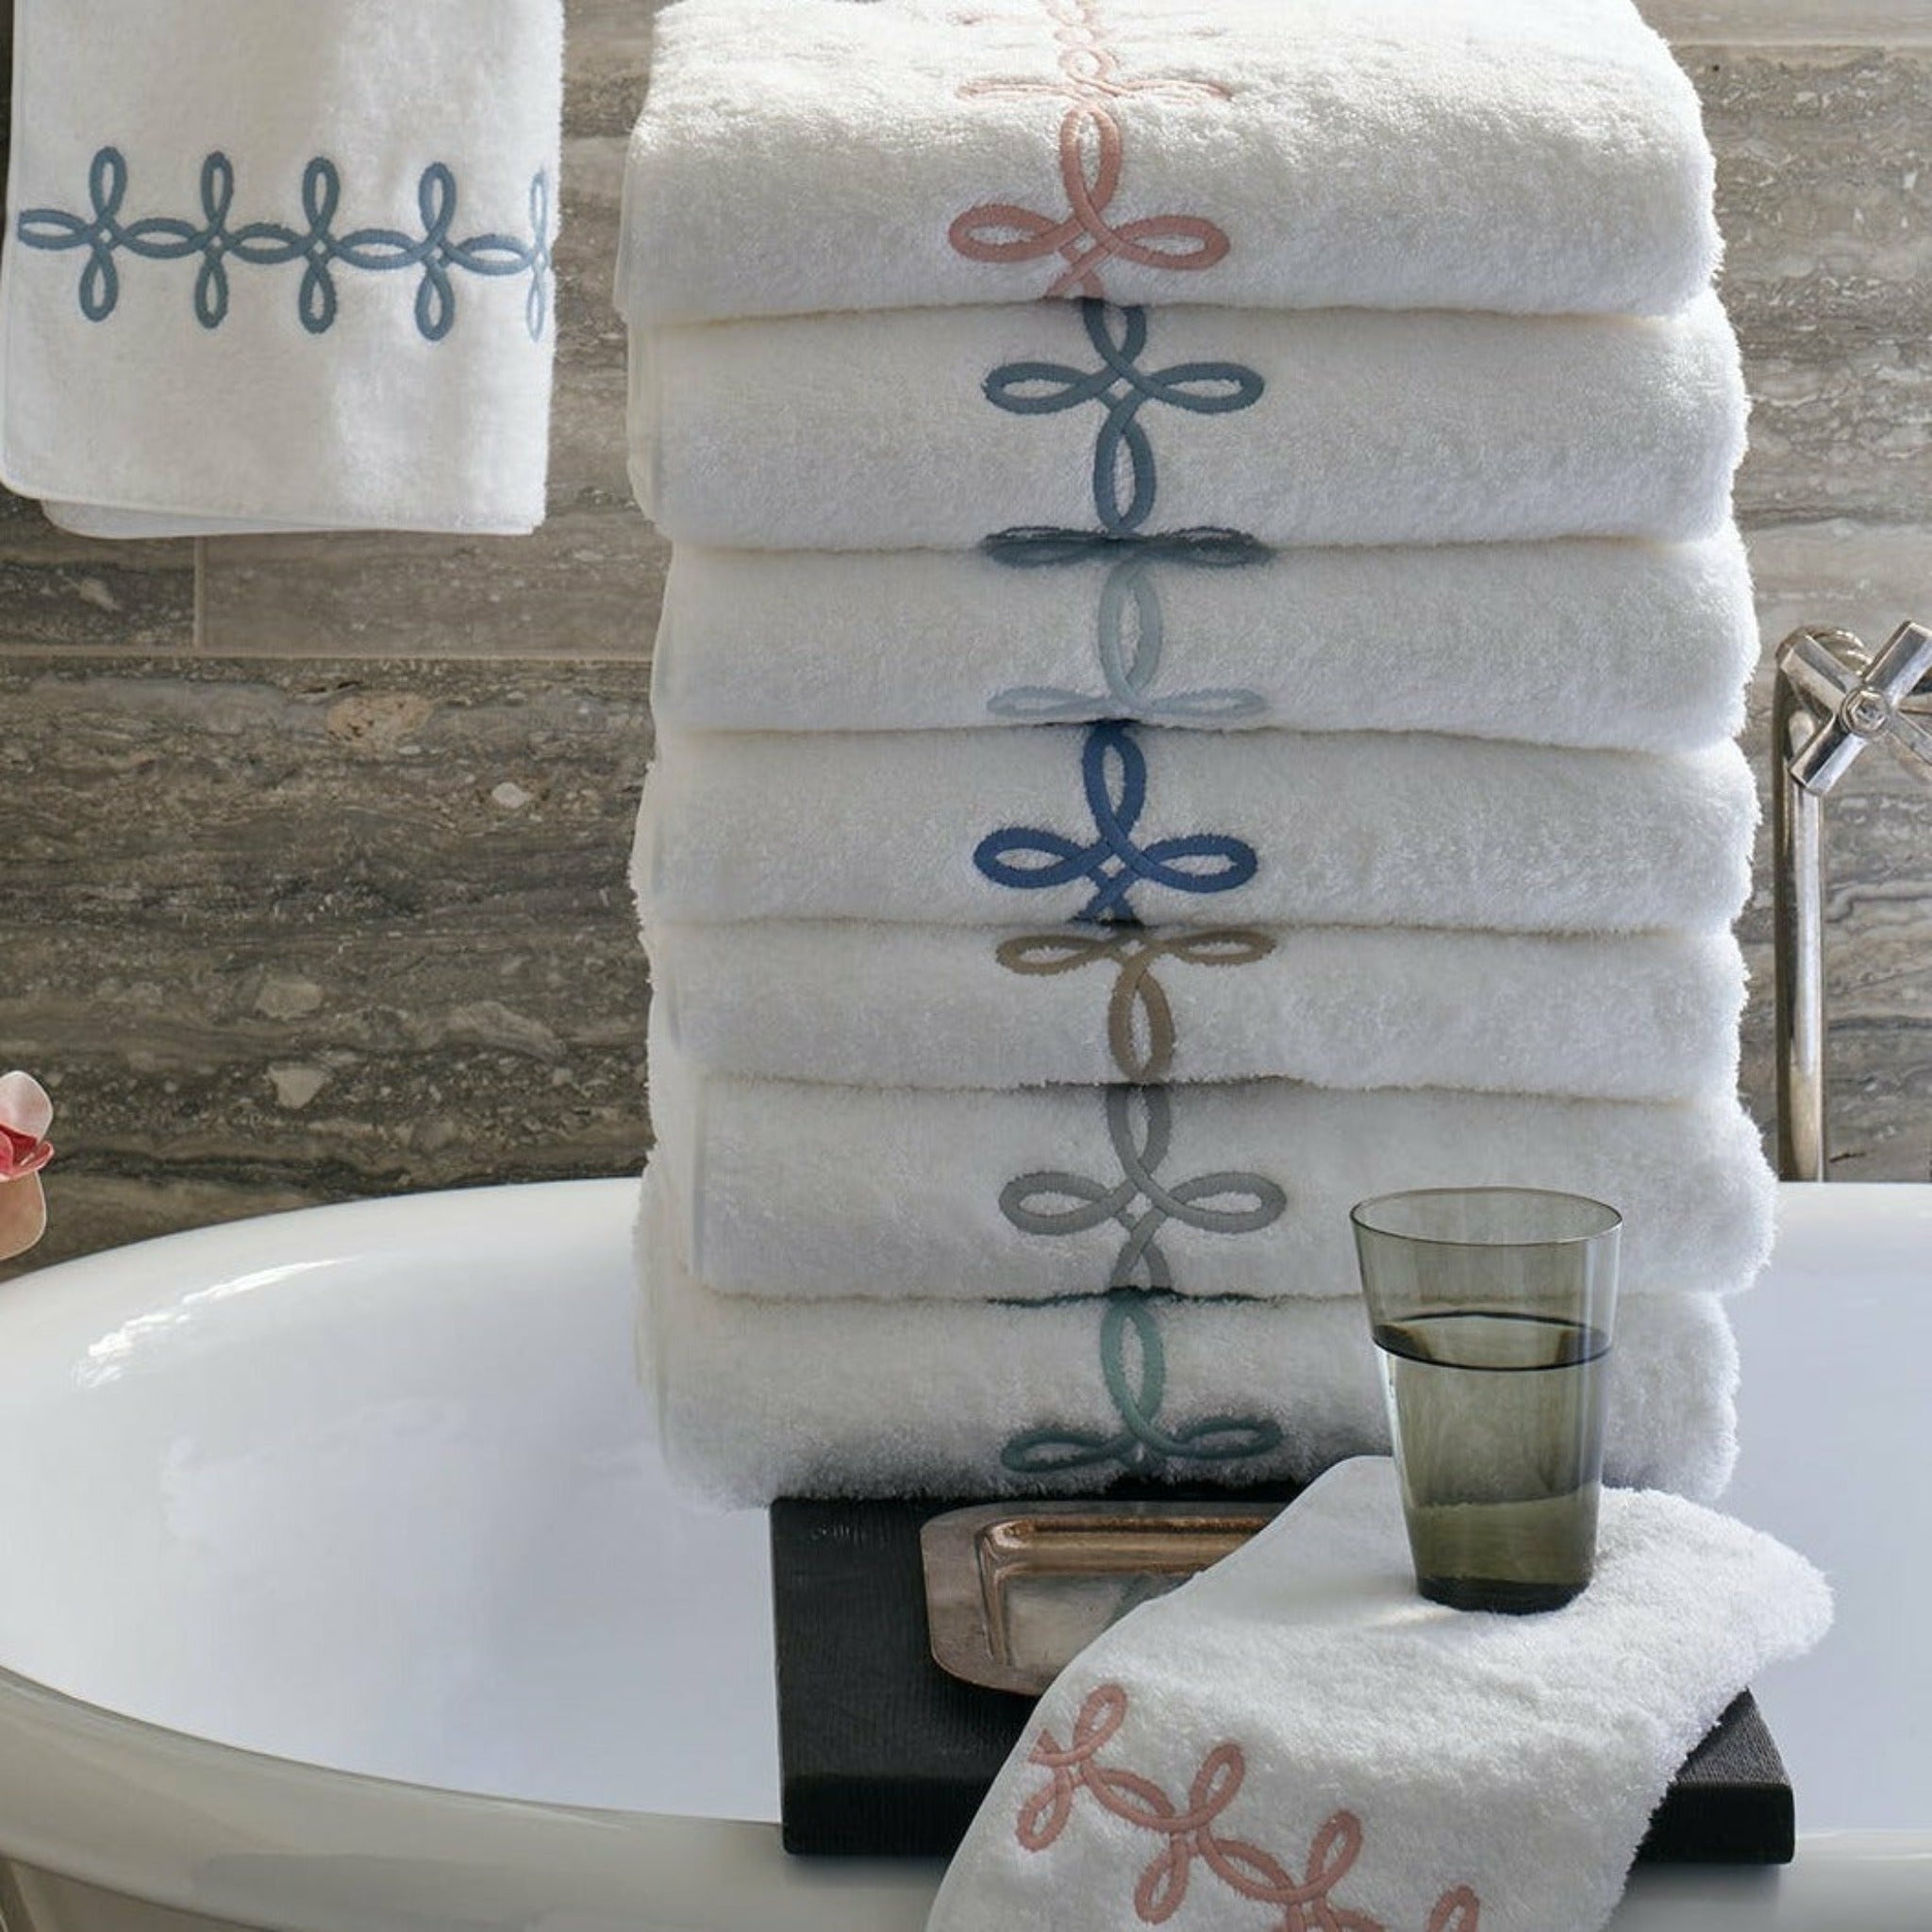 Matouk Classic Chain Bath Towel (White)